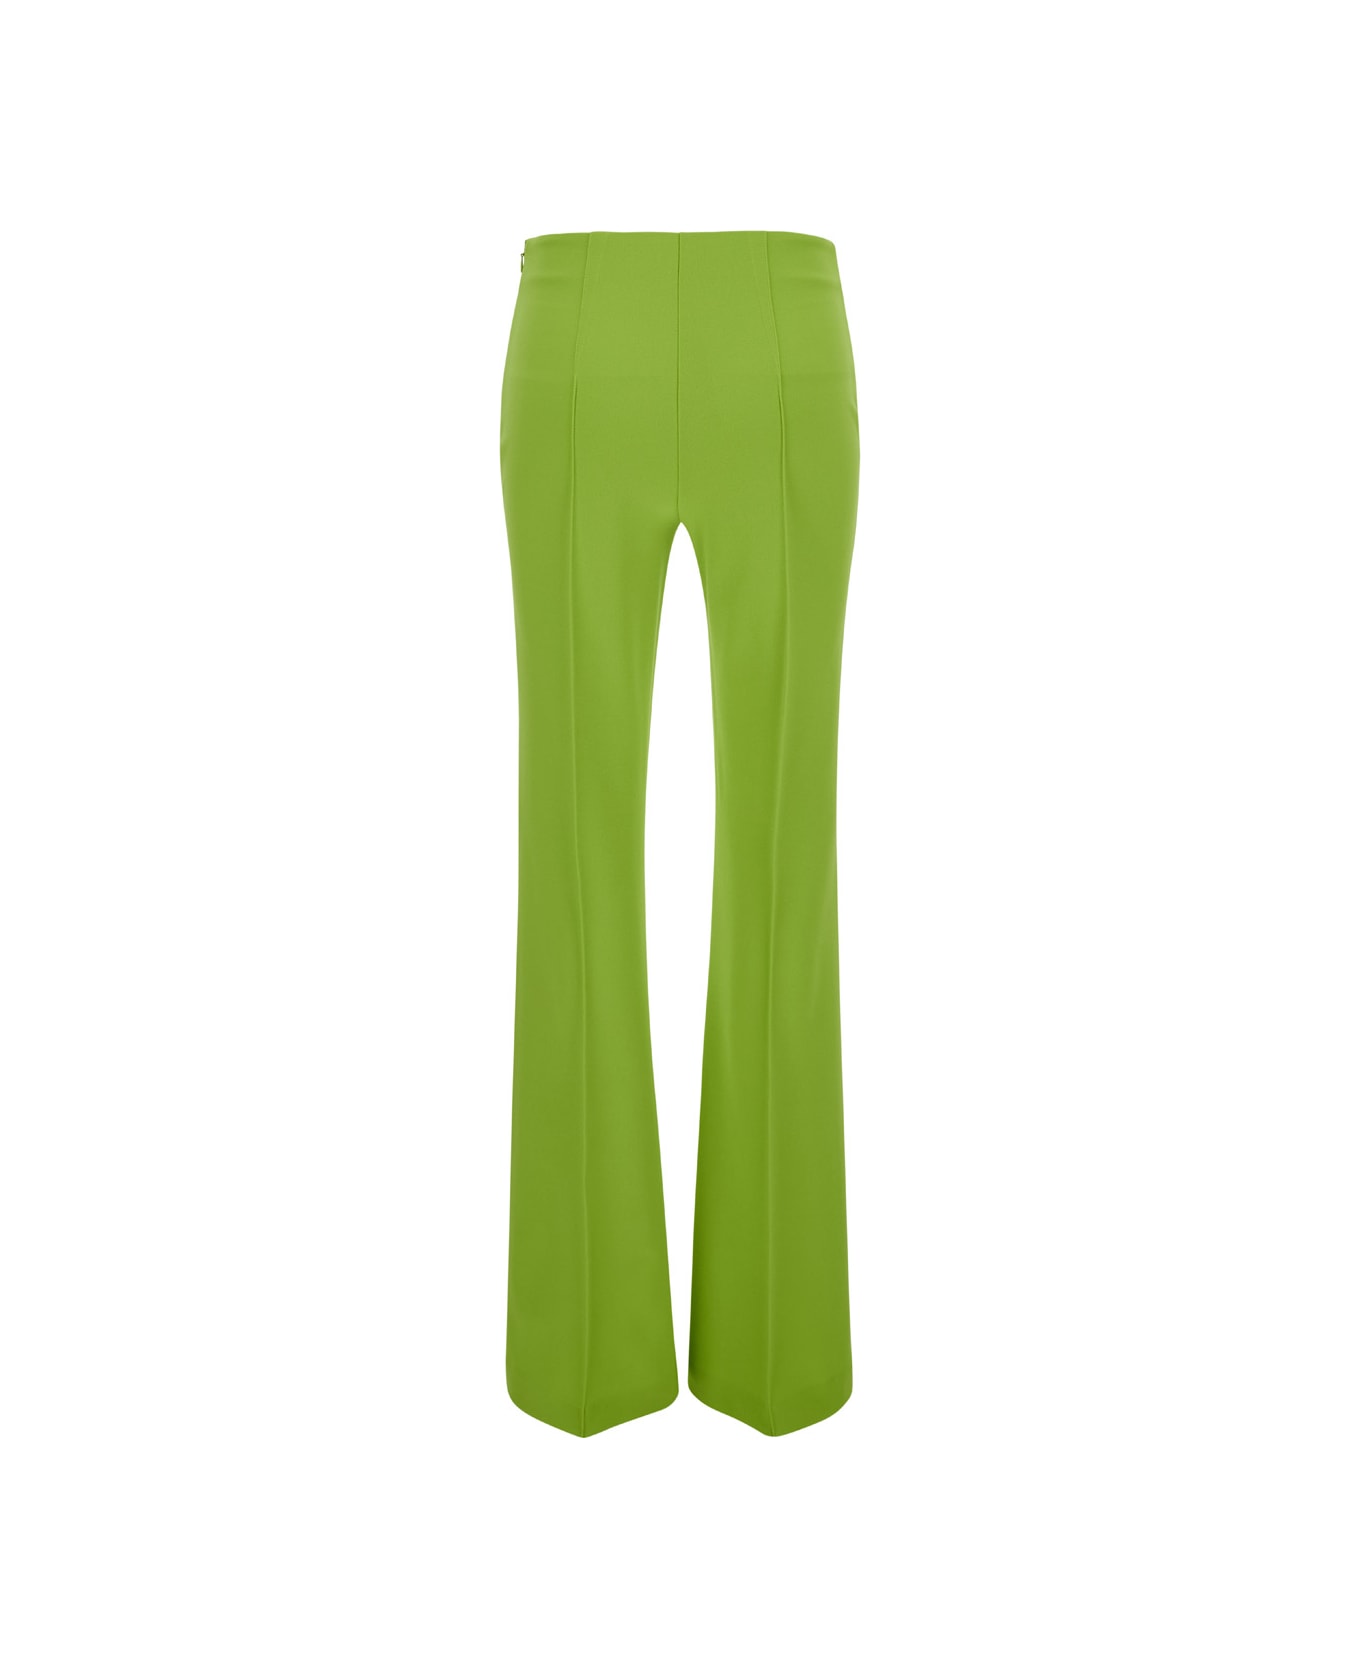 Liu-Jo Tailored High Waisted Green Pants In Stretch Fabric Woman Liu-jo - Green ボトムス